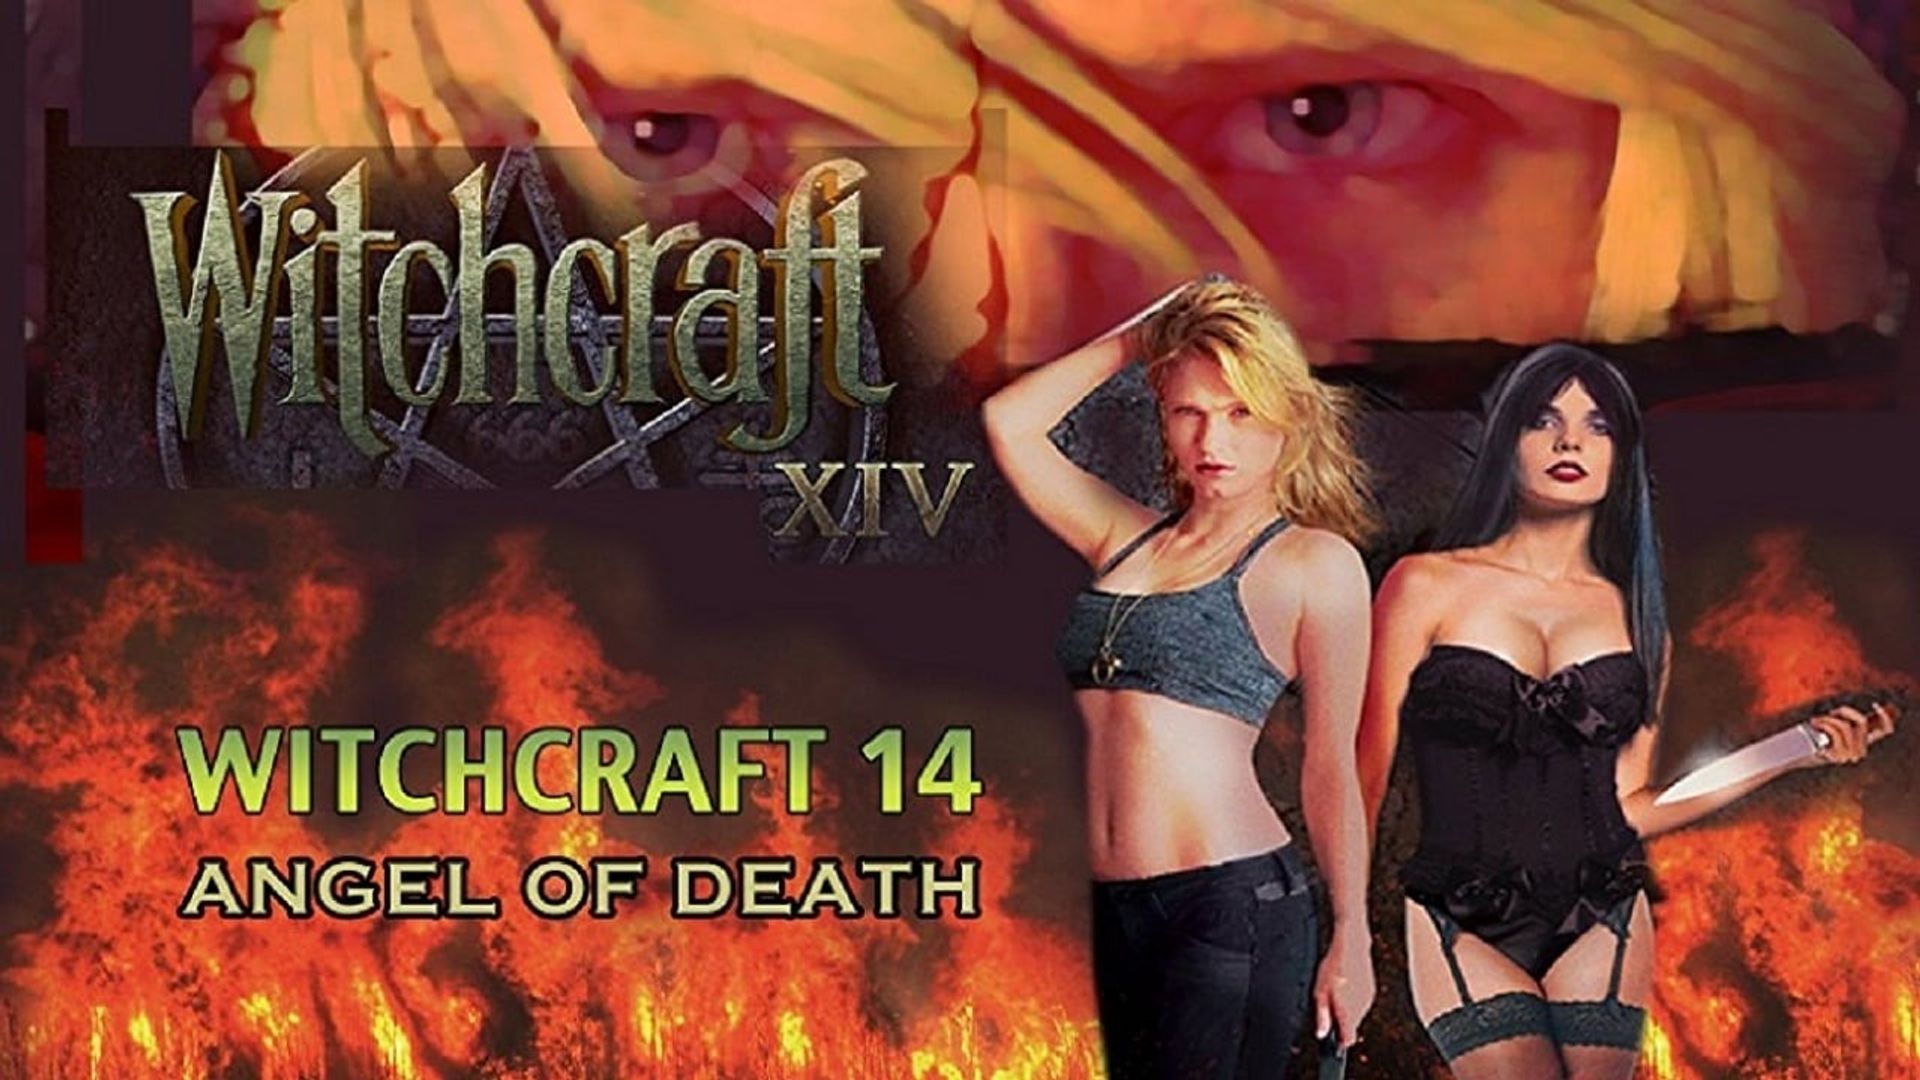 Witchcraft 14: Angel of Death background